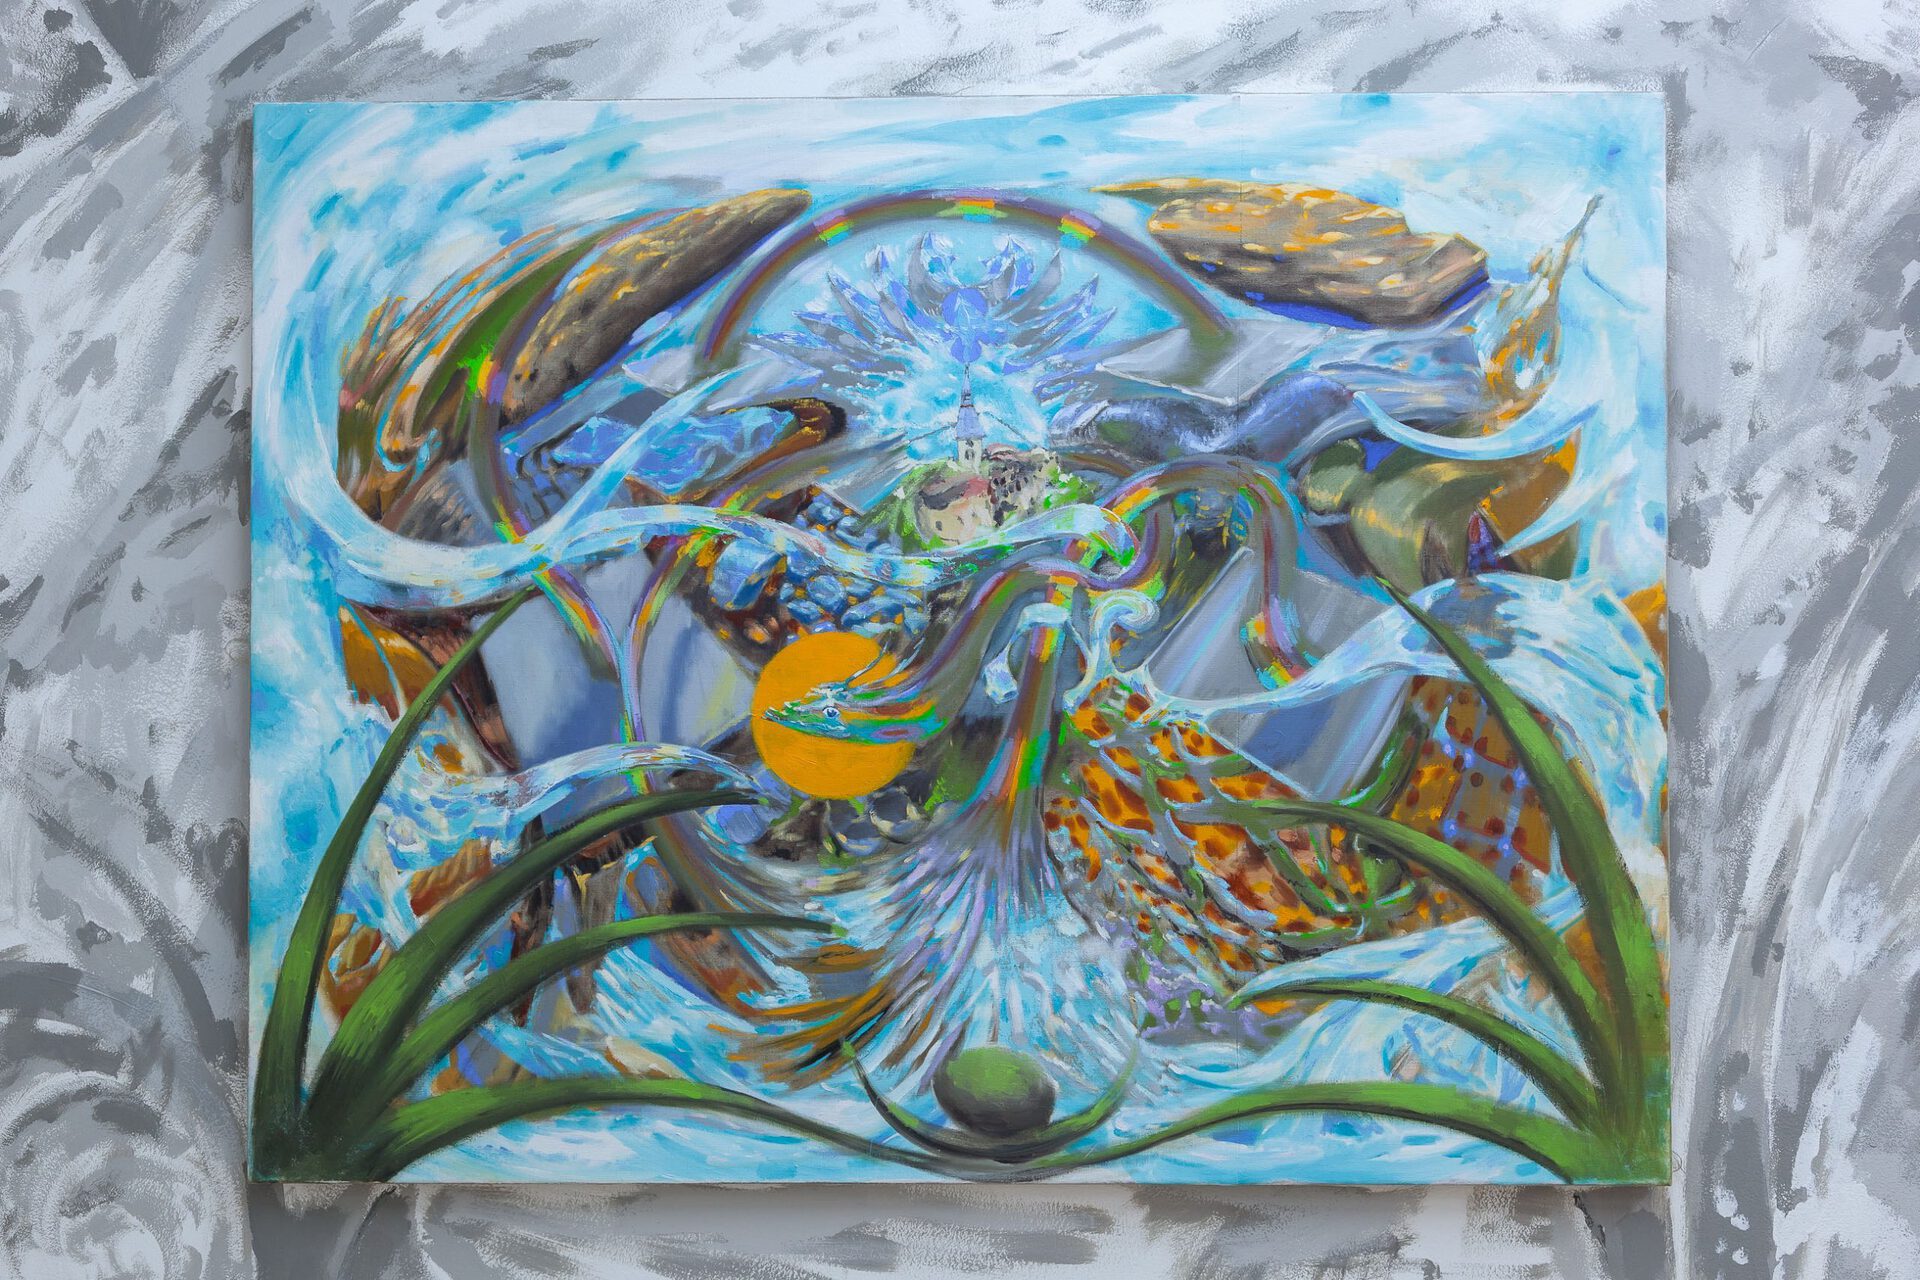 Snake t(a/i)l(e), 92 x 120 cm, oil on canvas, 2020